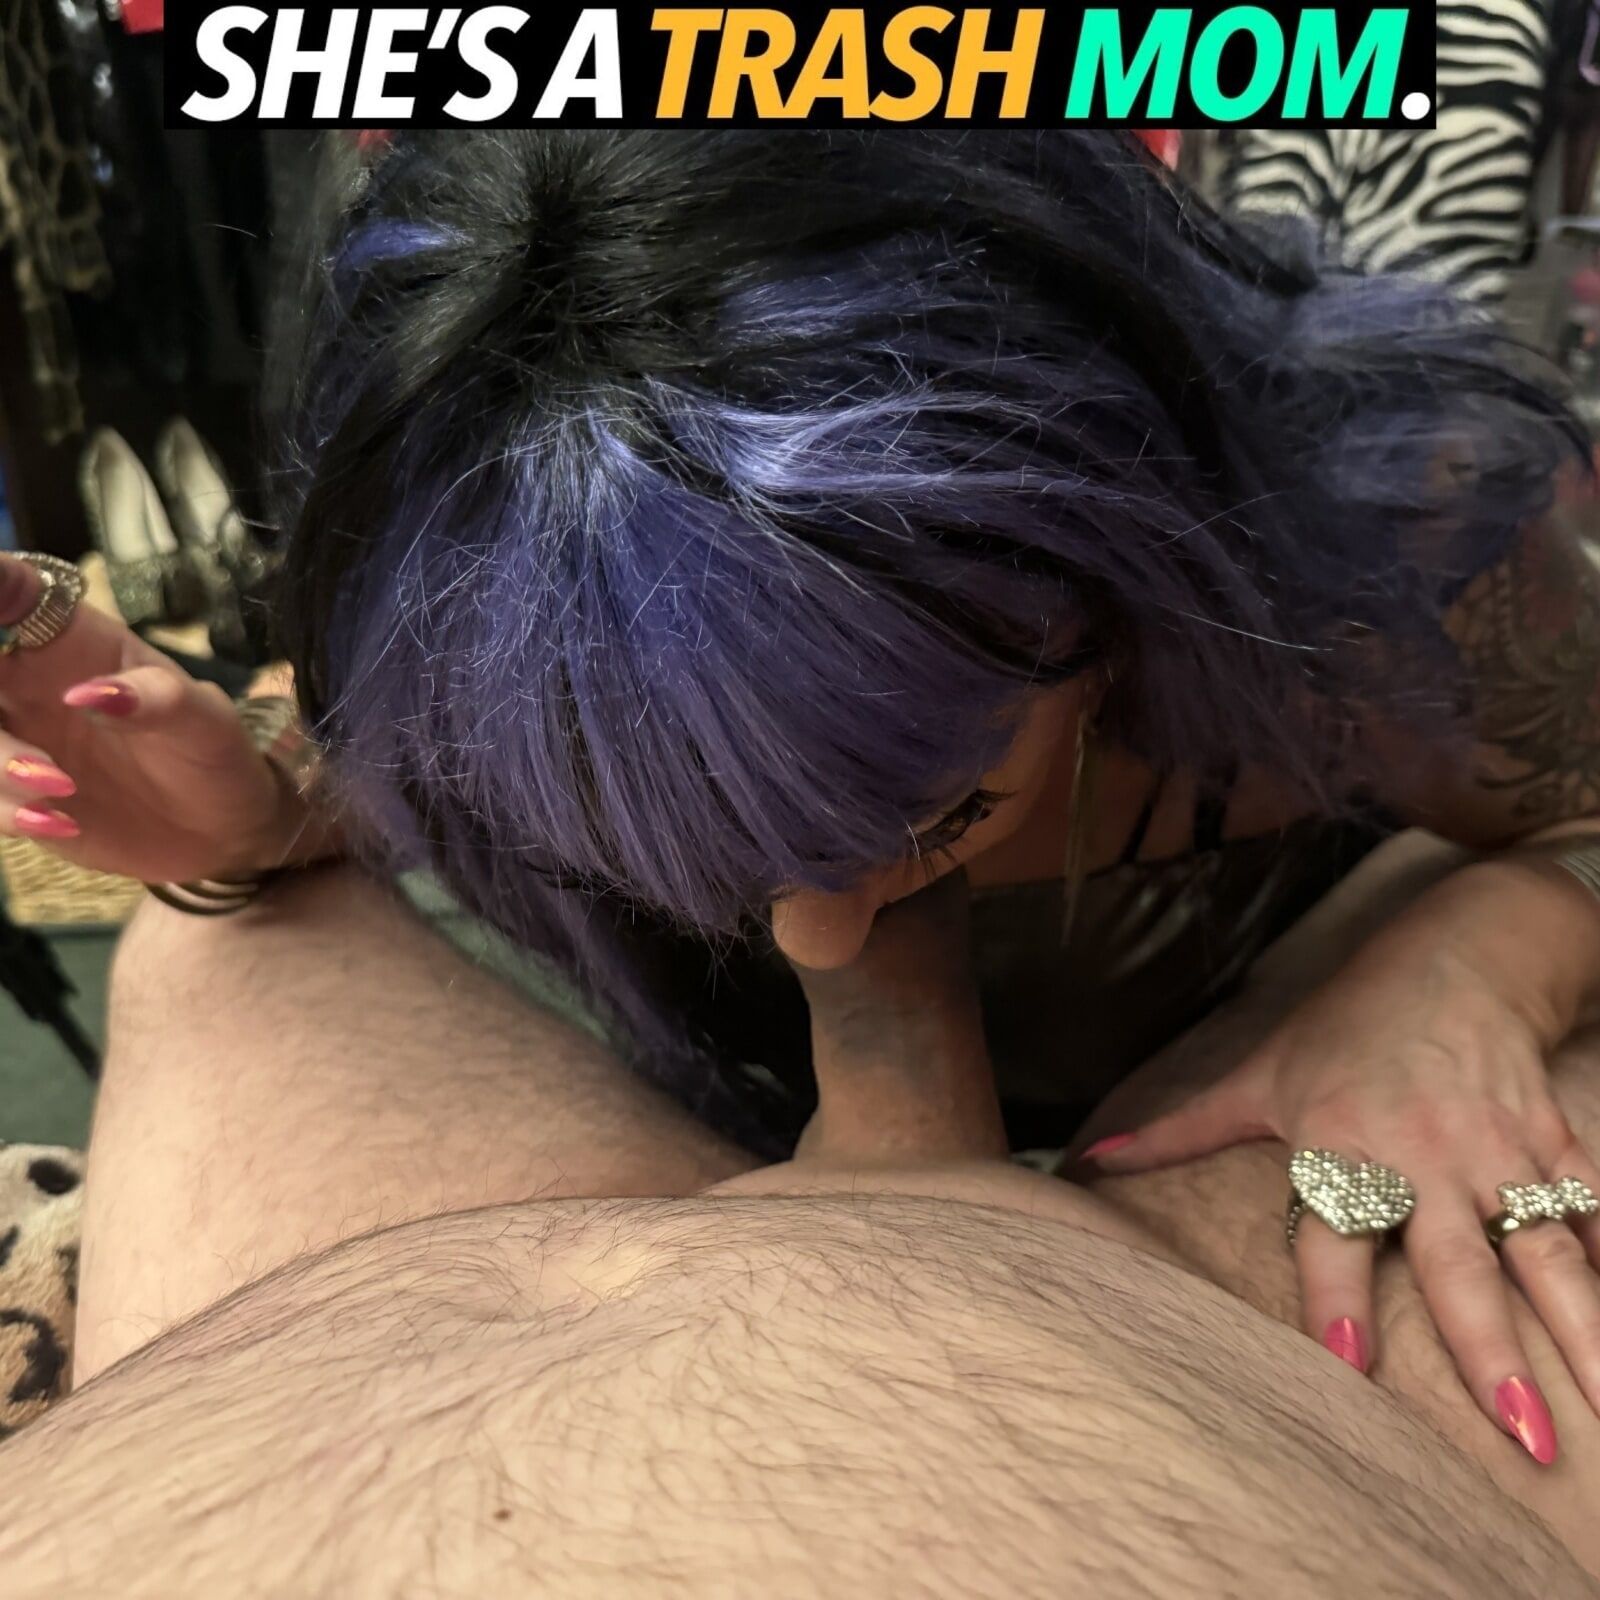 SHIRLEY TRASH MOM #16